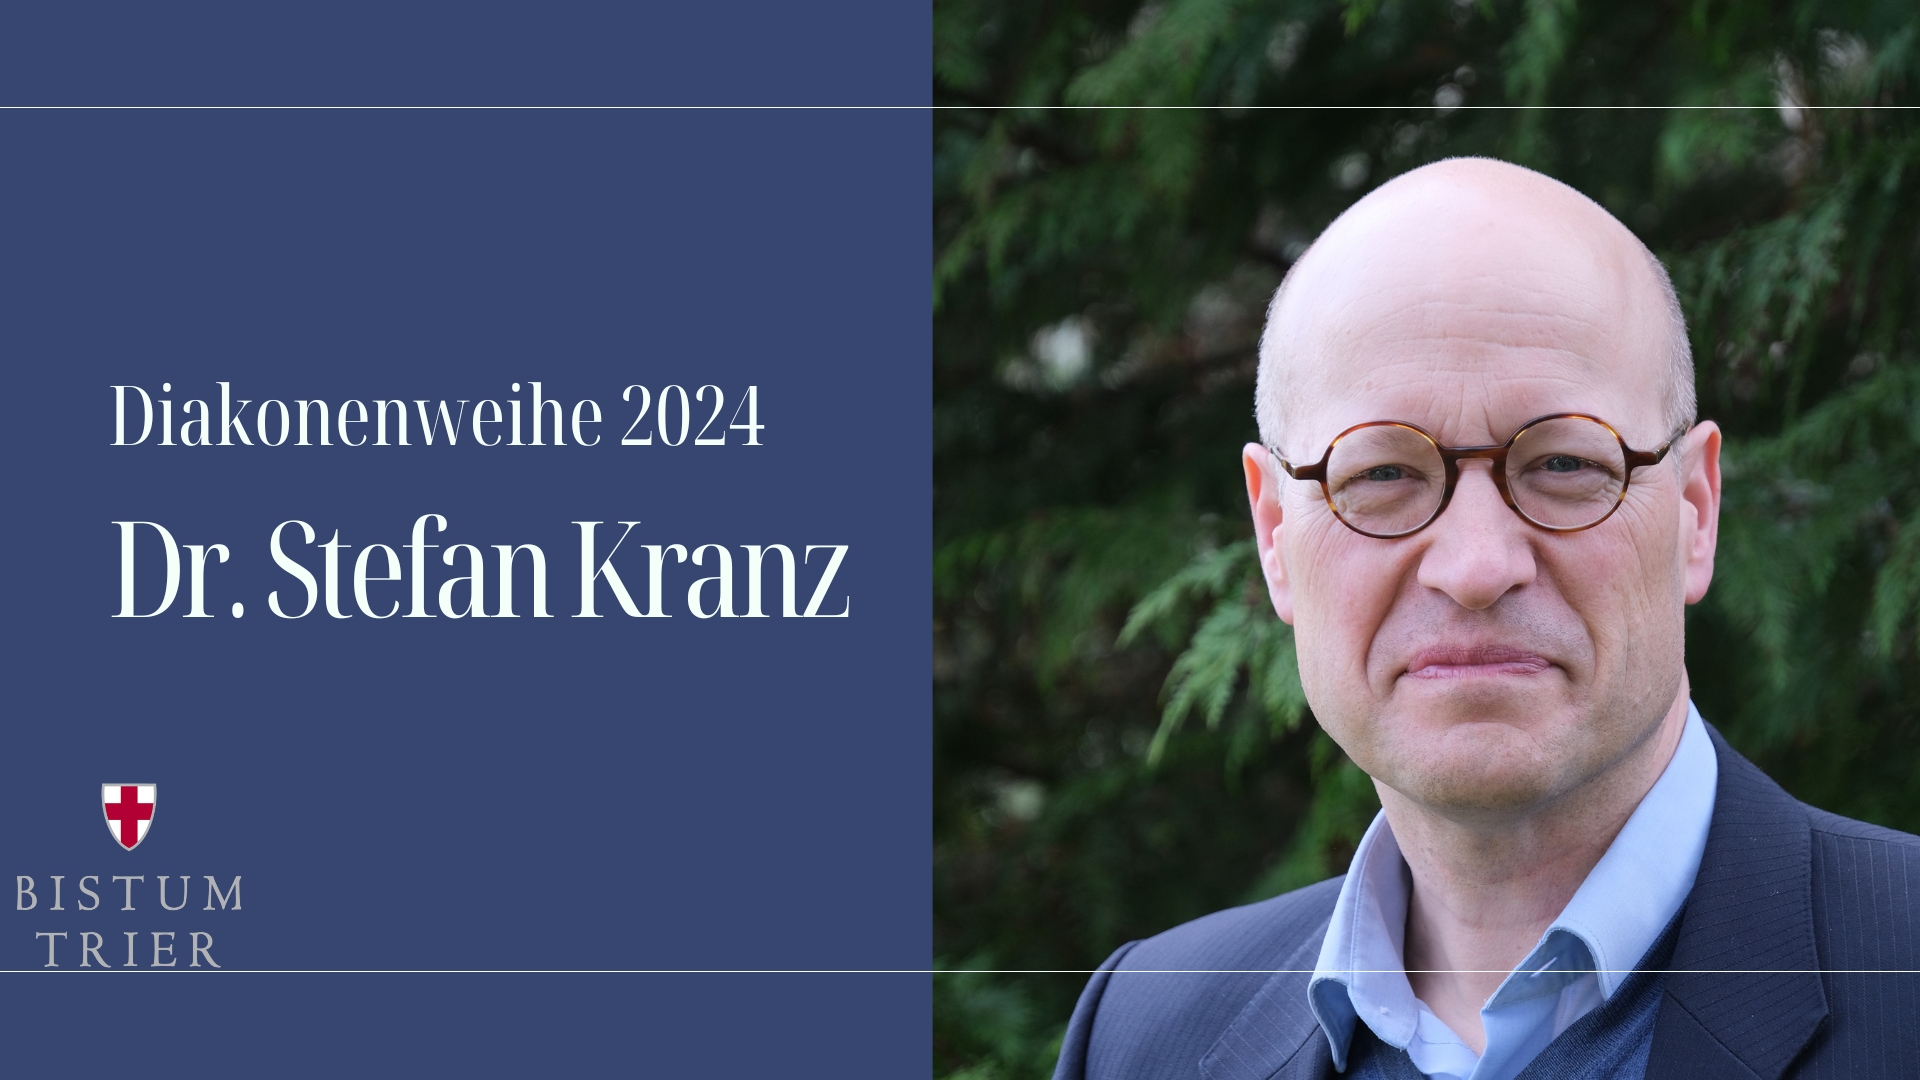 Dr. Stefan Kranz